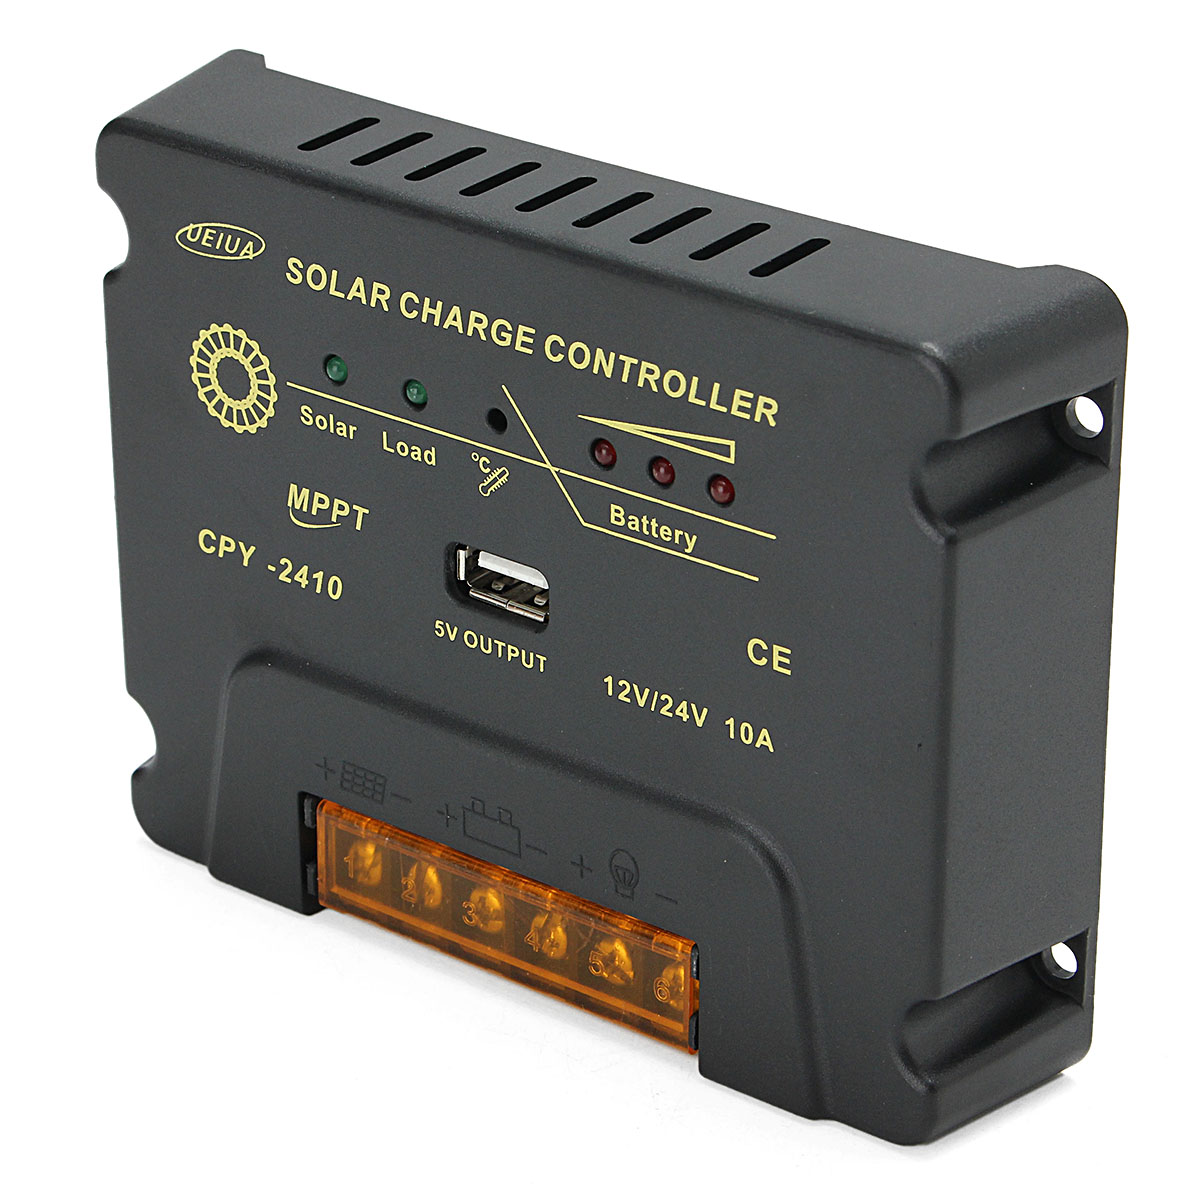 

CPY-2410 12V/24V 10A USB MPPT Solar Panel Battery Charge Controller